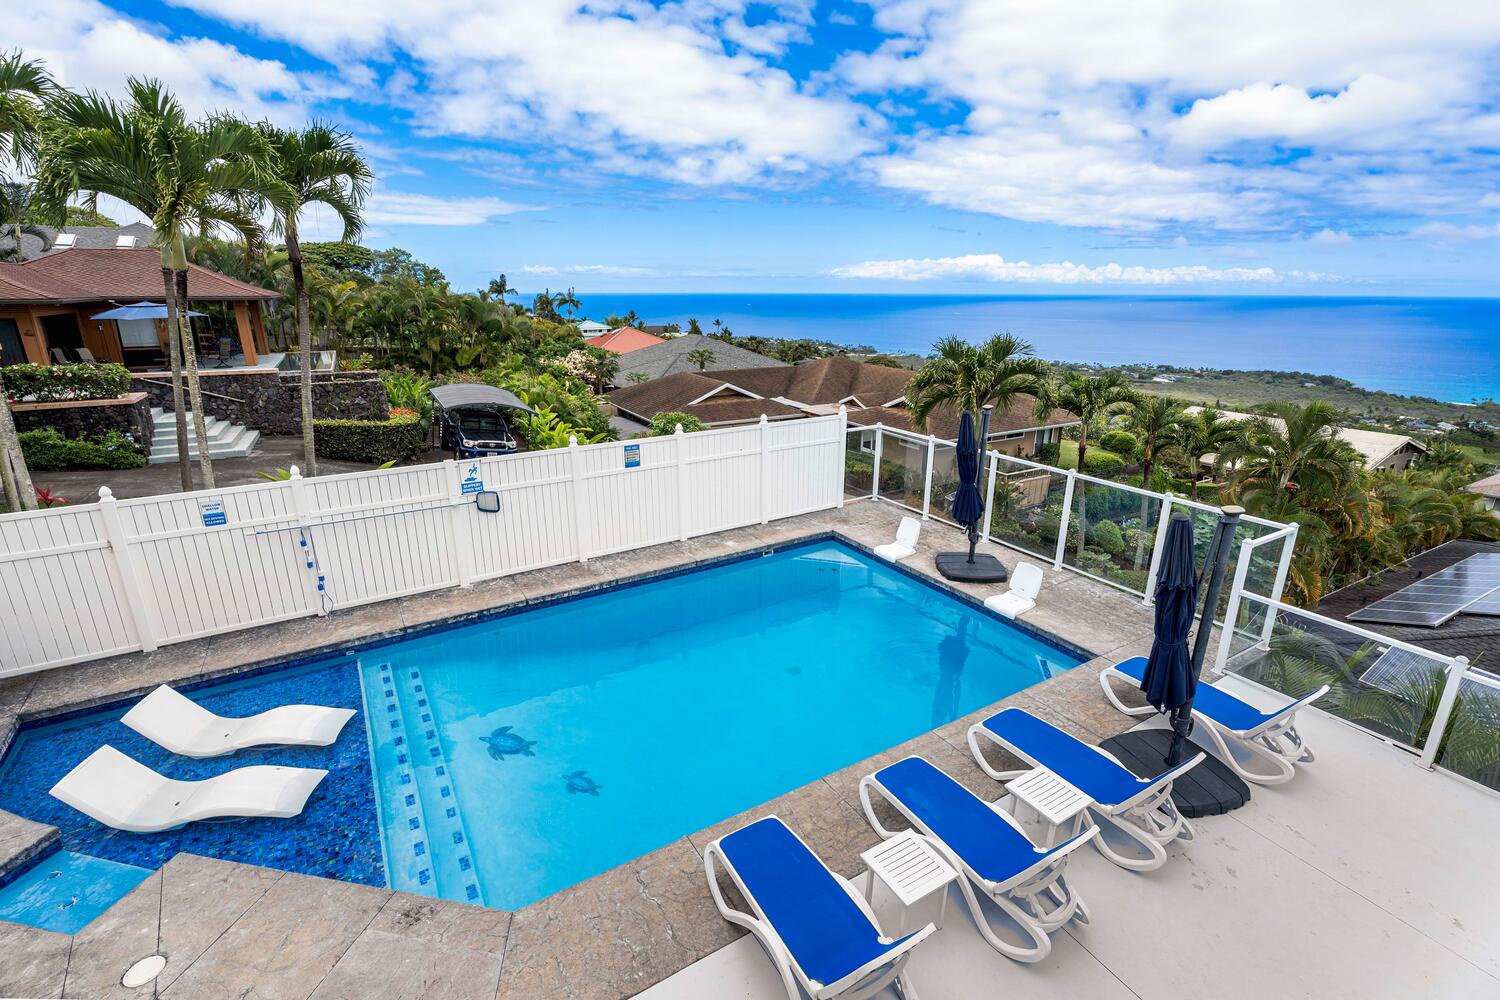 Kailua Kona Vacation Rentals, Honu O Kai (Turtle of the Sea) - The view of the pool from the upstair lanai.